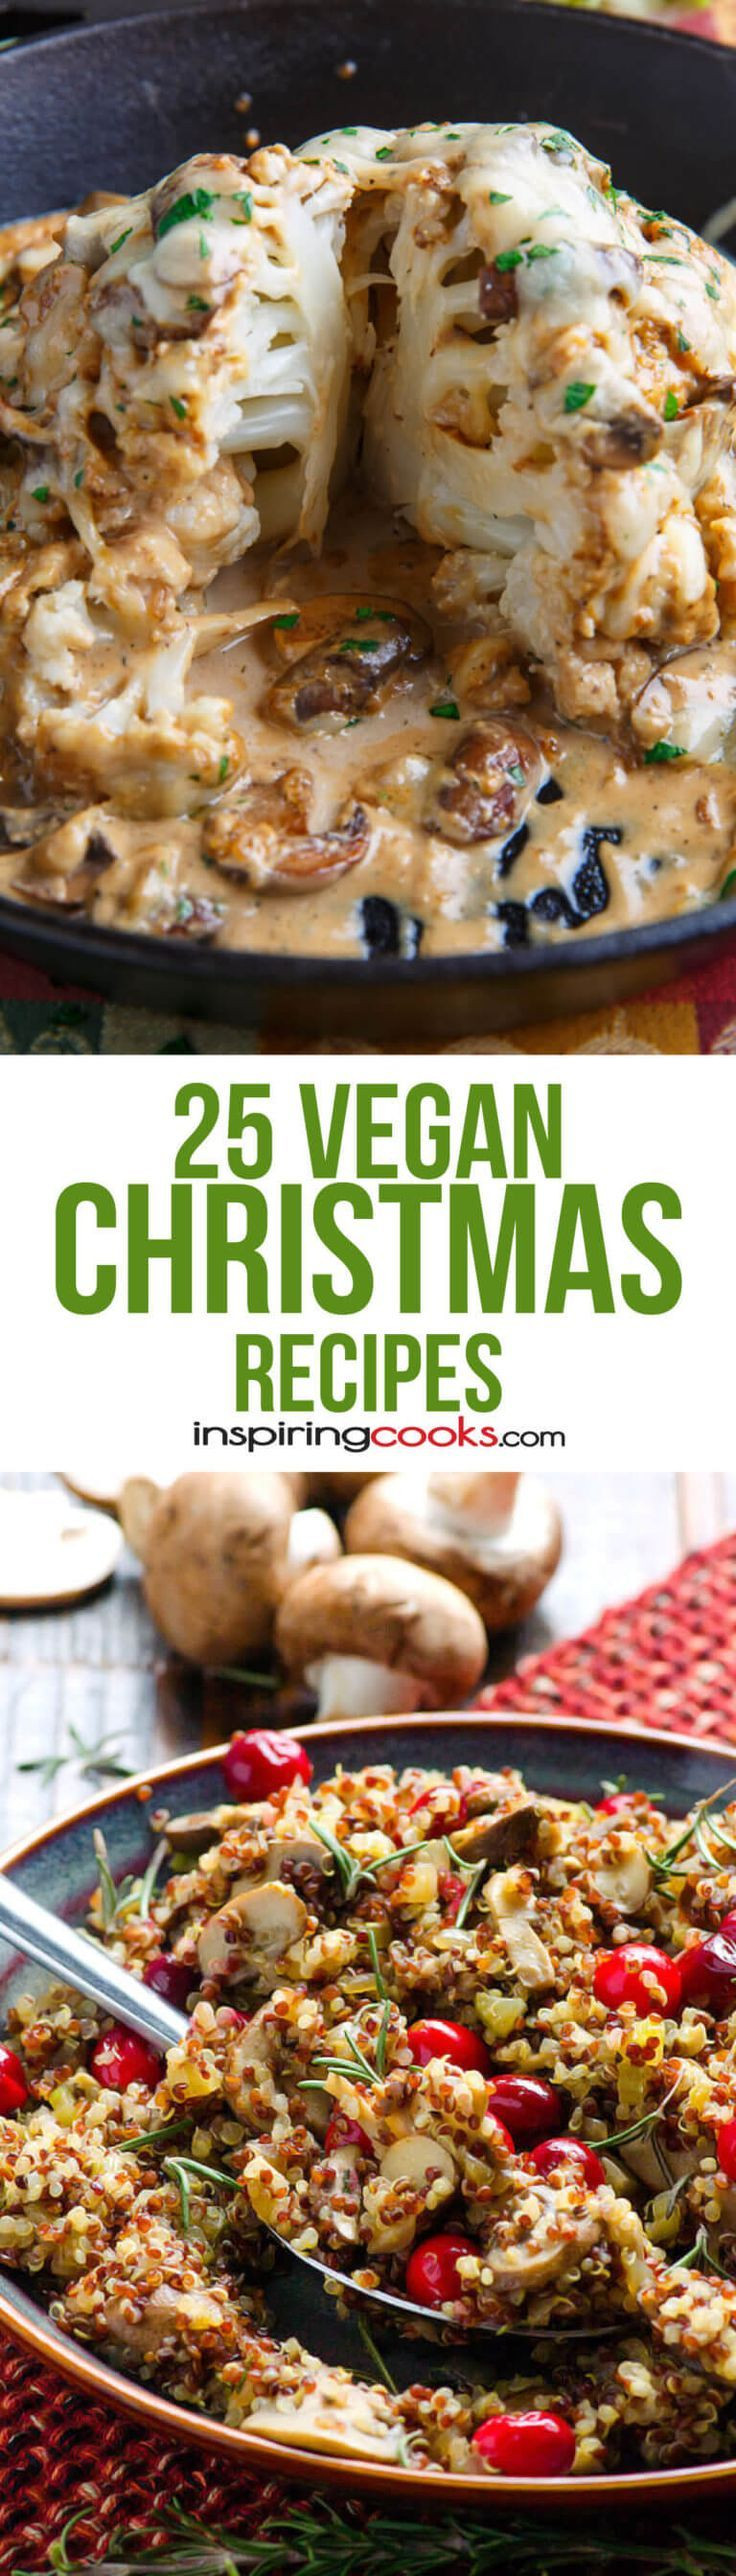 Christmas Vegan Recipes
 Best 25 Ve arian christmas recipes ideas on Pinterest